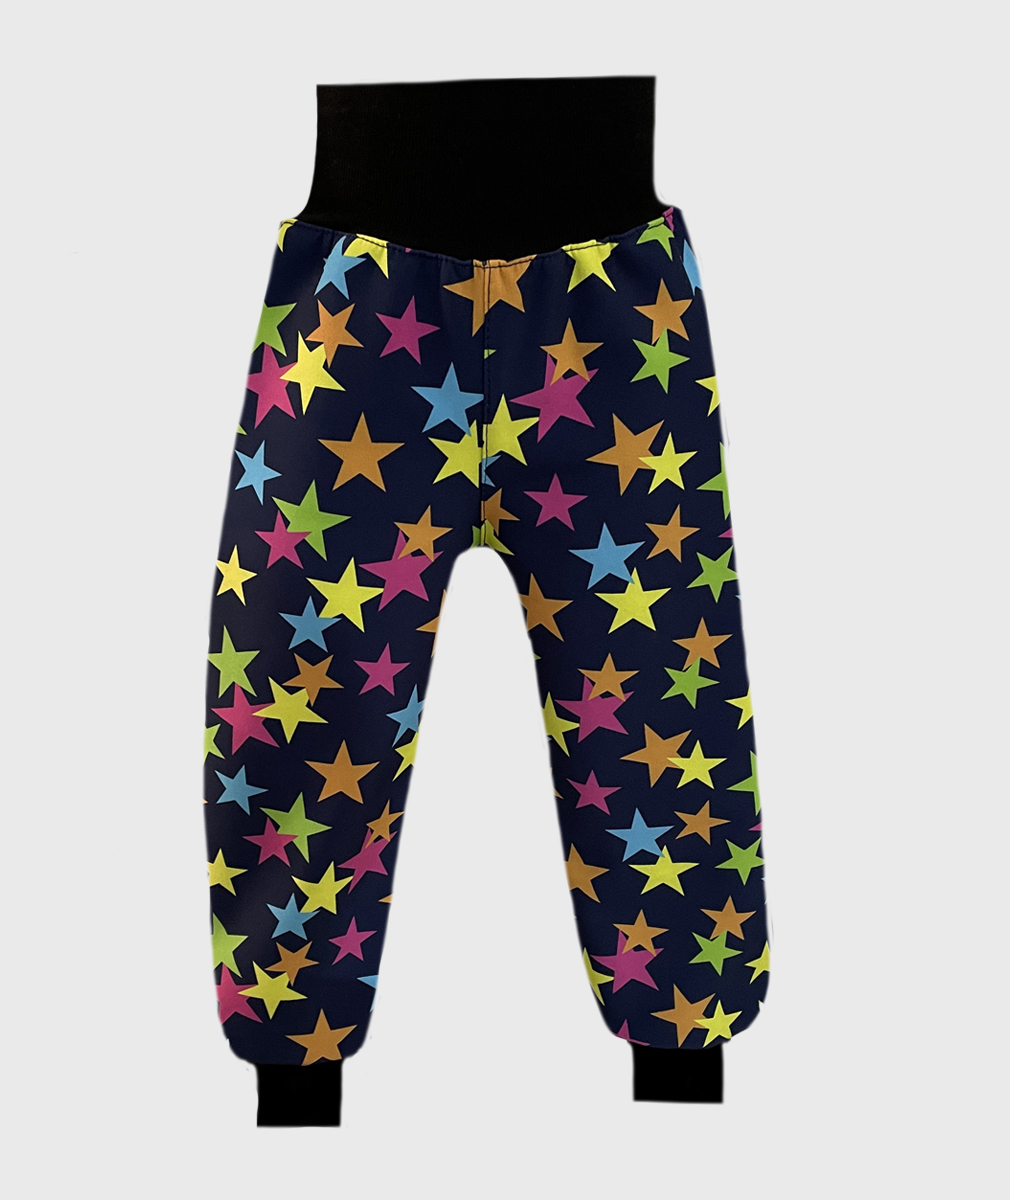 Waterproof Softshell Pants Multicolor Stars von iELM